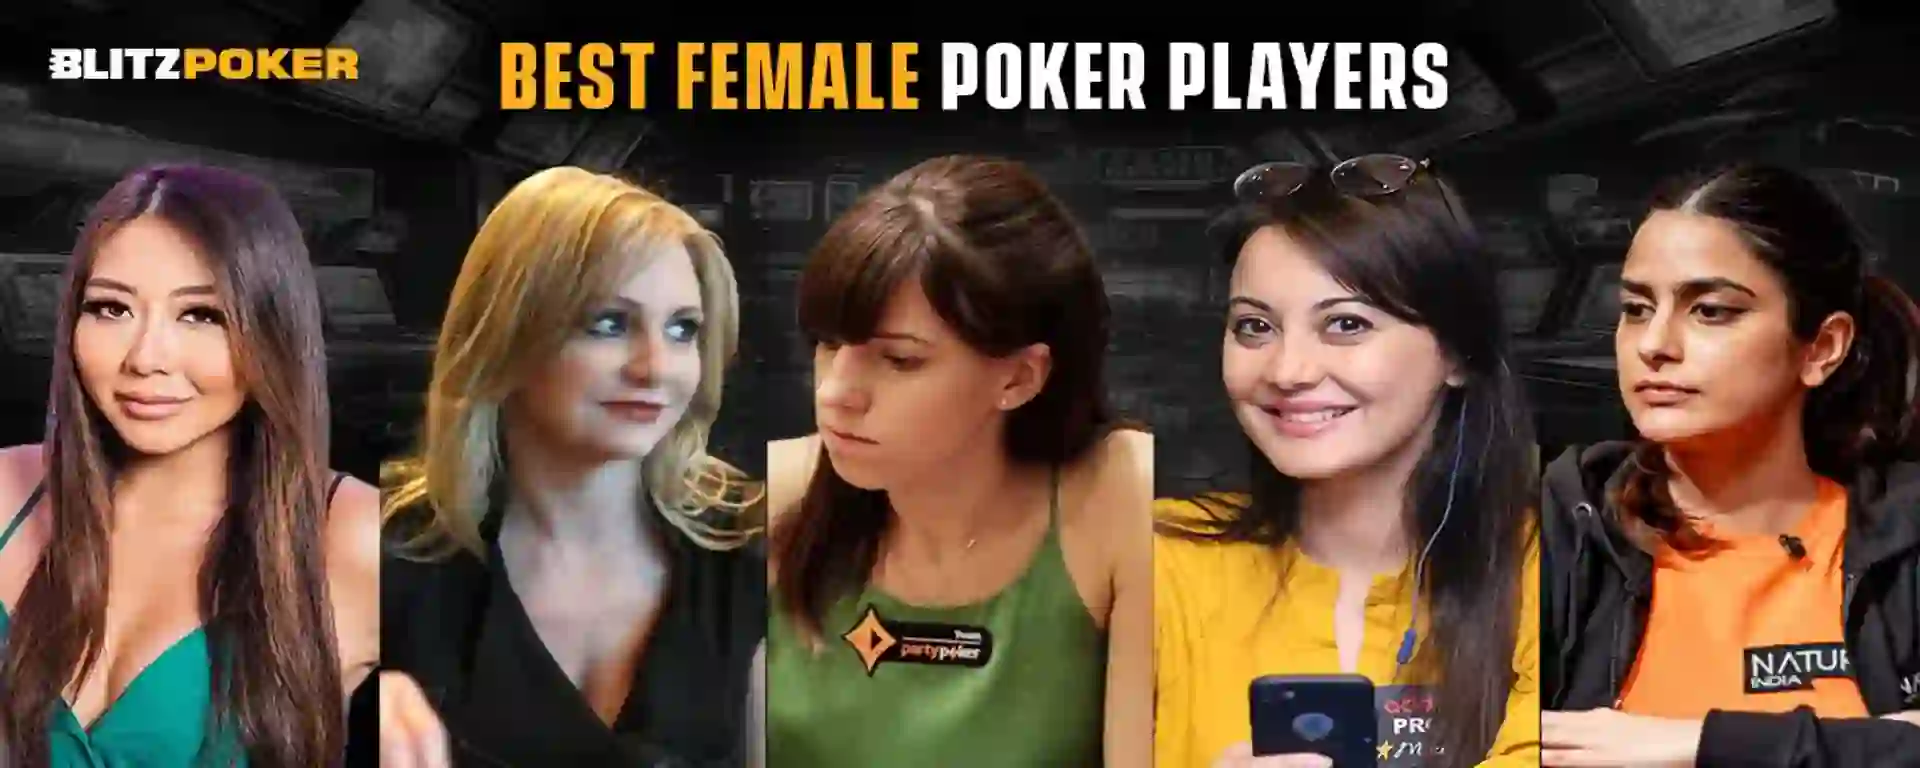 Best Female Poker Players